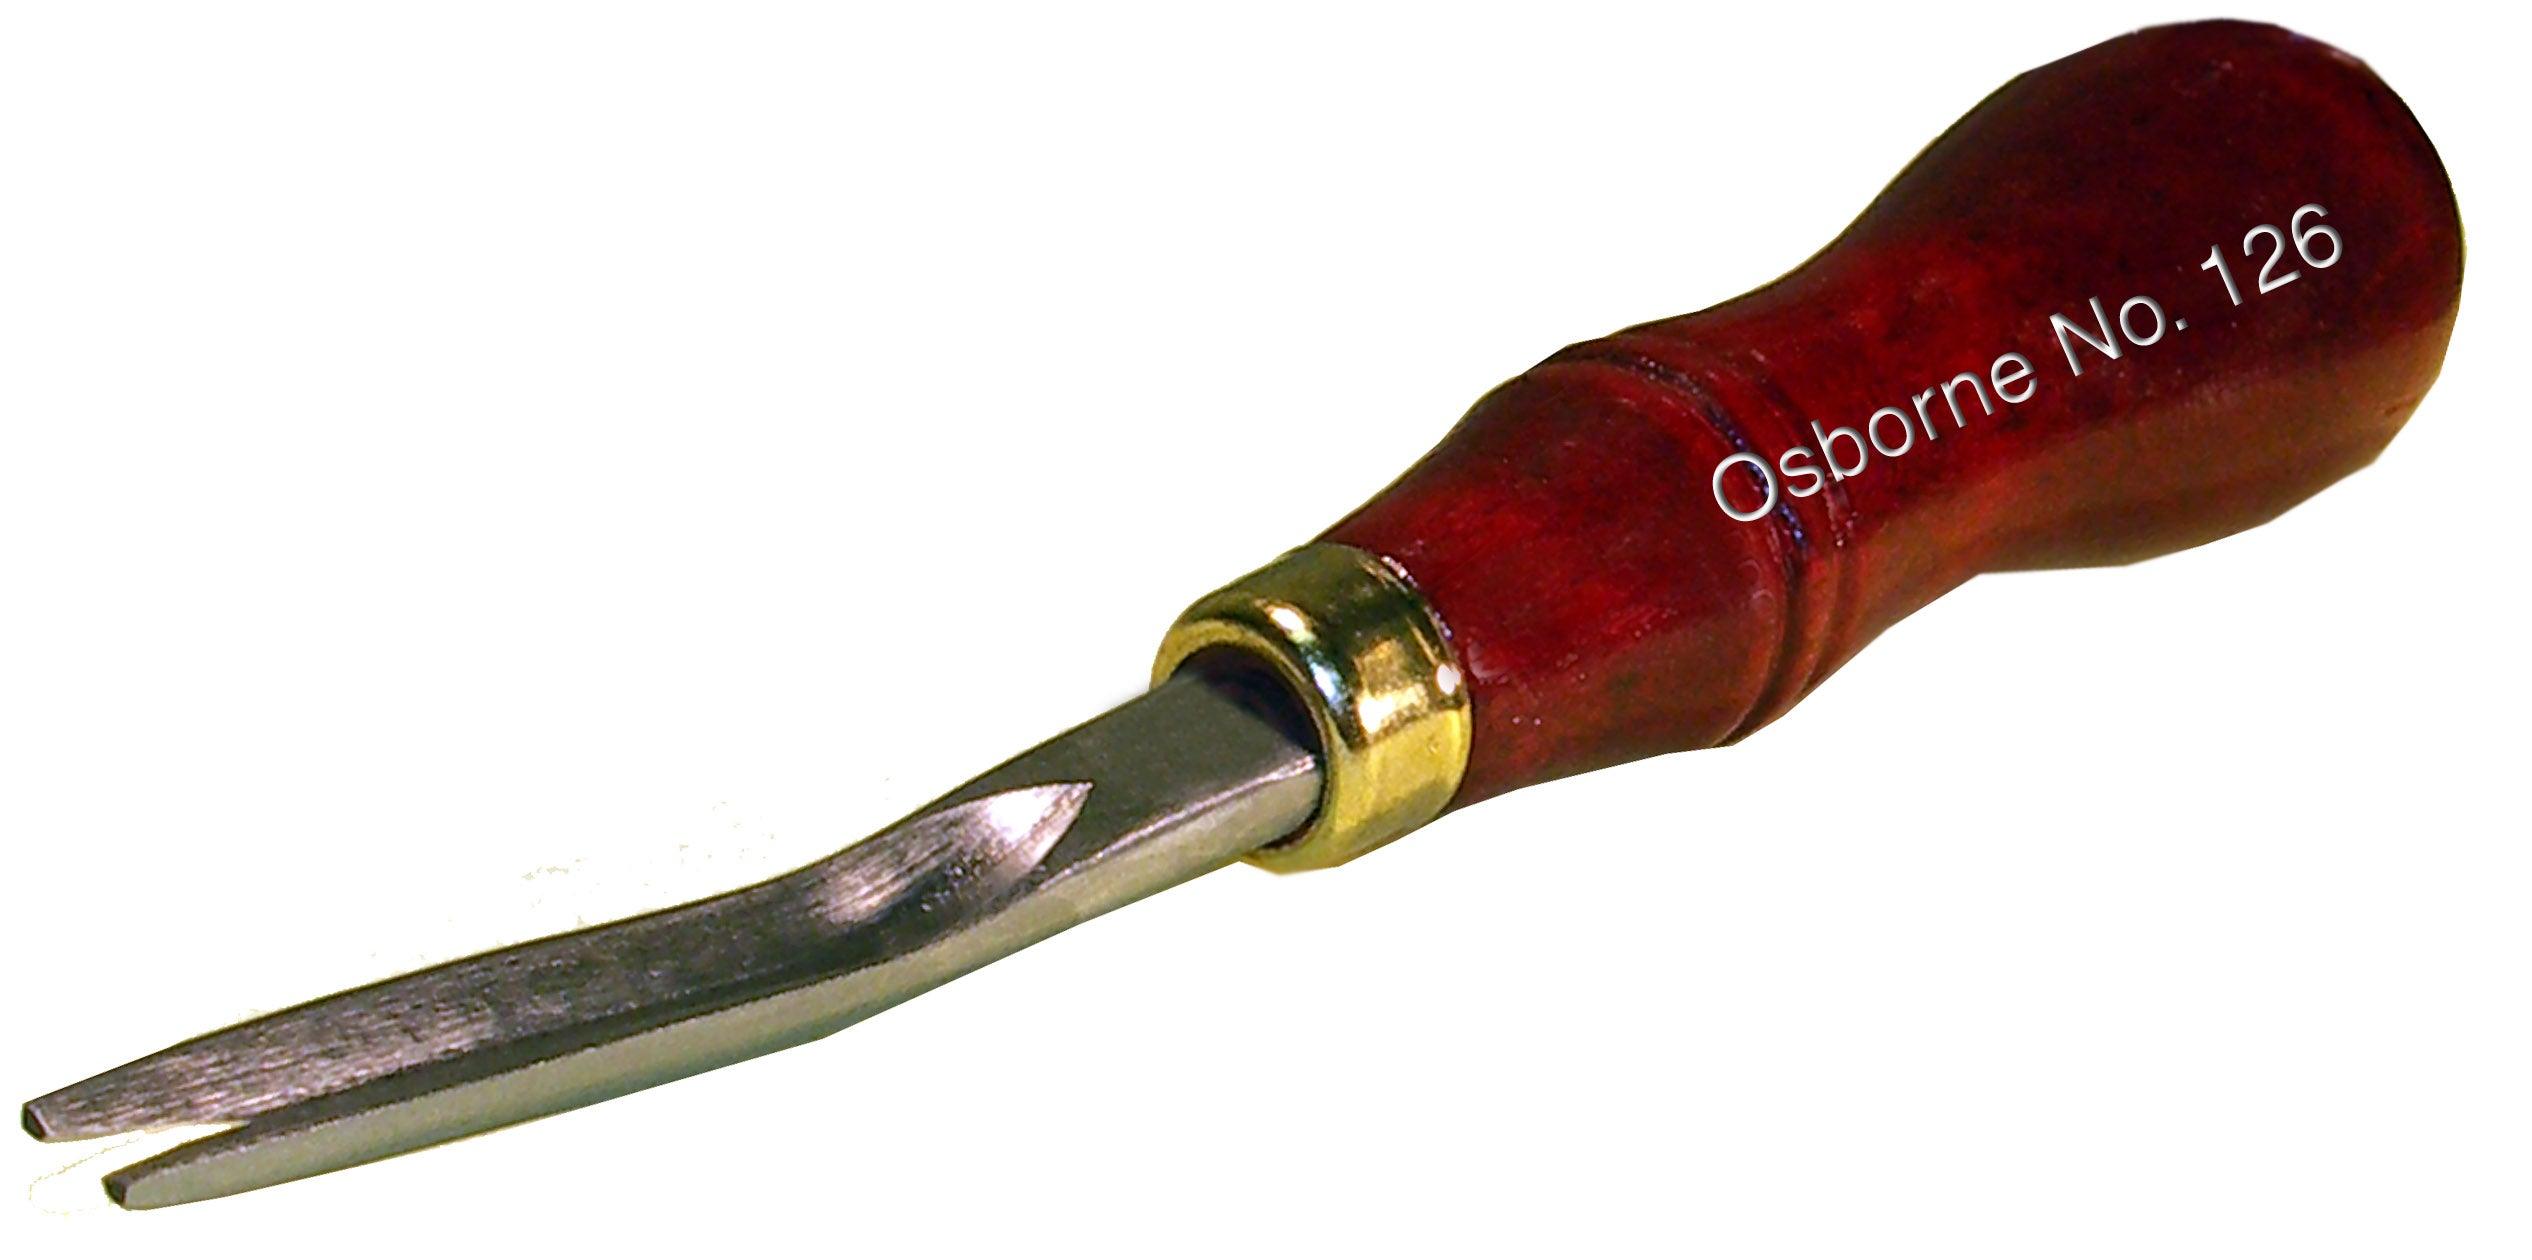 C.S. Osborne Finest Edge Tool - Drop Forged - 1/16" - Alan Richard Textiles, LTD C.S. Osborne, C.S. Osborne Edge Tools